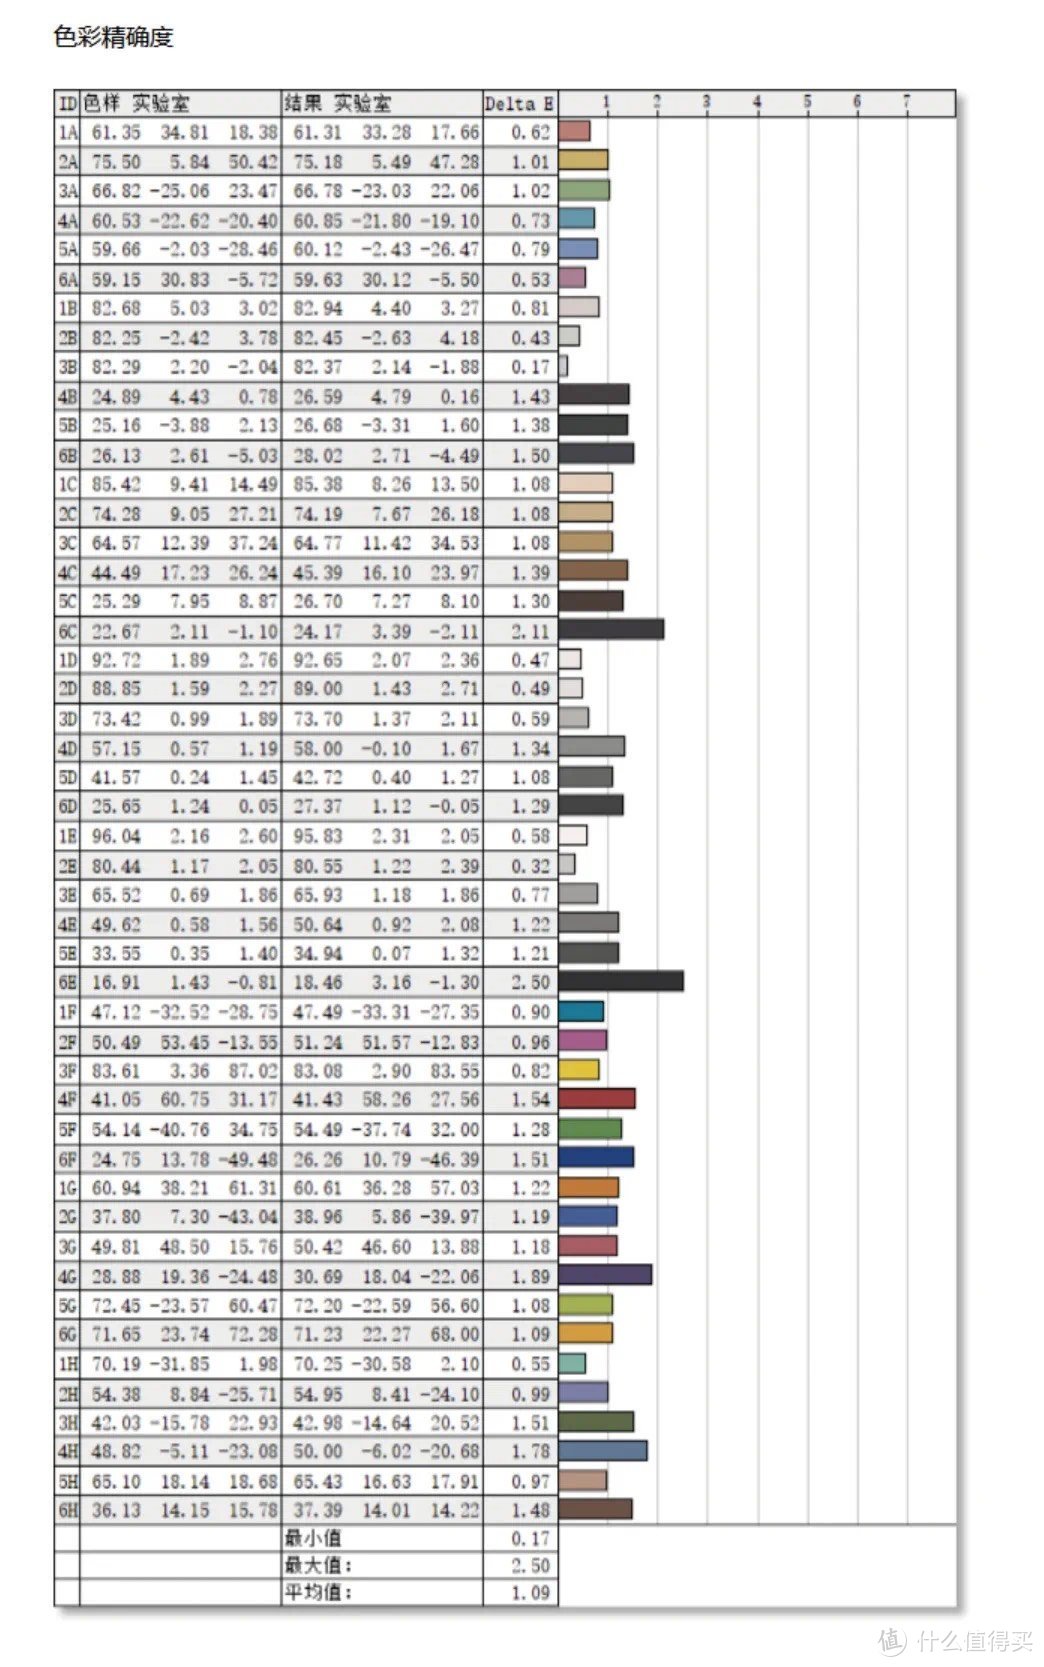 ▲Evnia 27M2N6800ML在最高48种测试色彩下，它的最大值为2.5（最不准确），最小值为0.17（最准确），平均值为1.09，色彩准确性相当高。